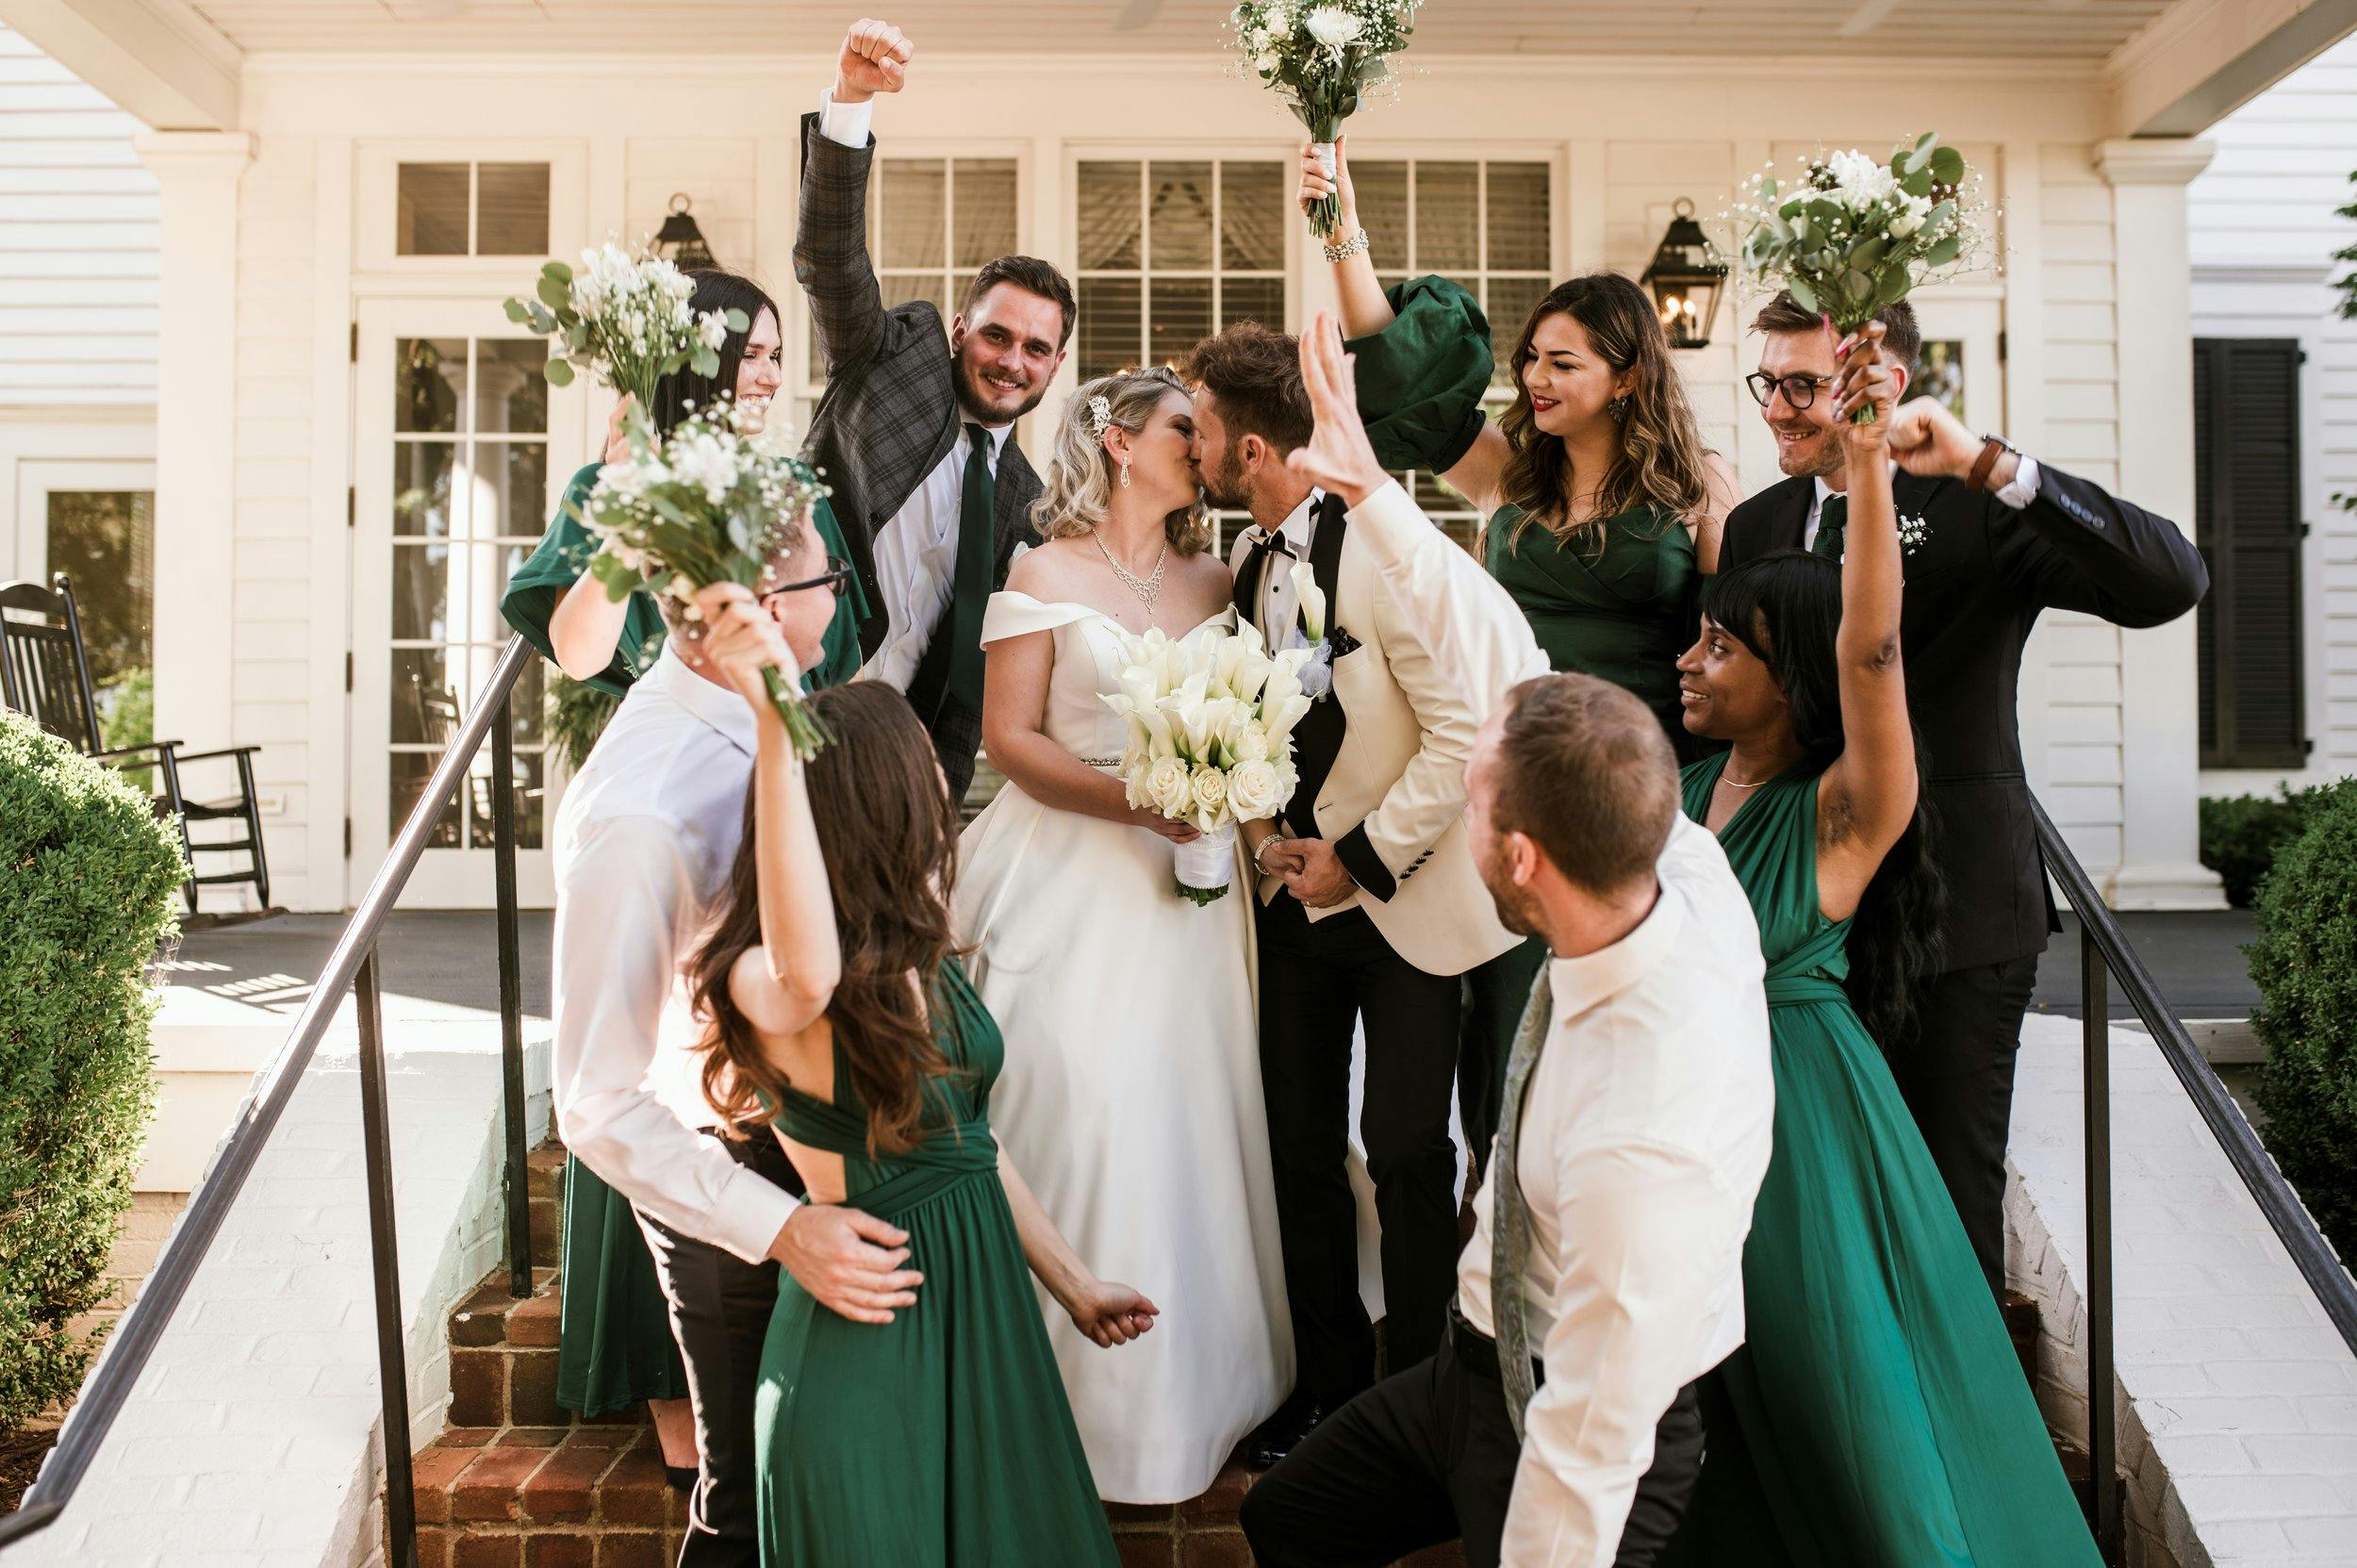 We create stress-free wedding experiences